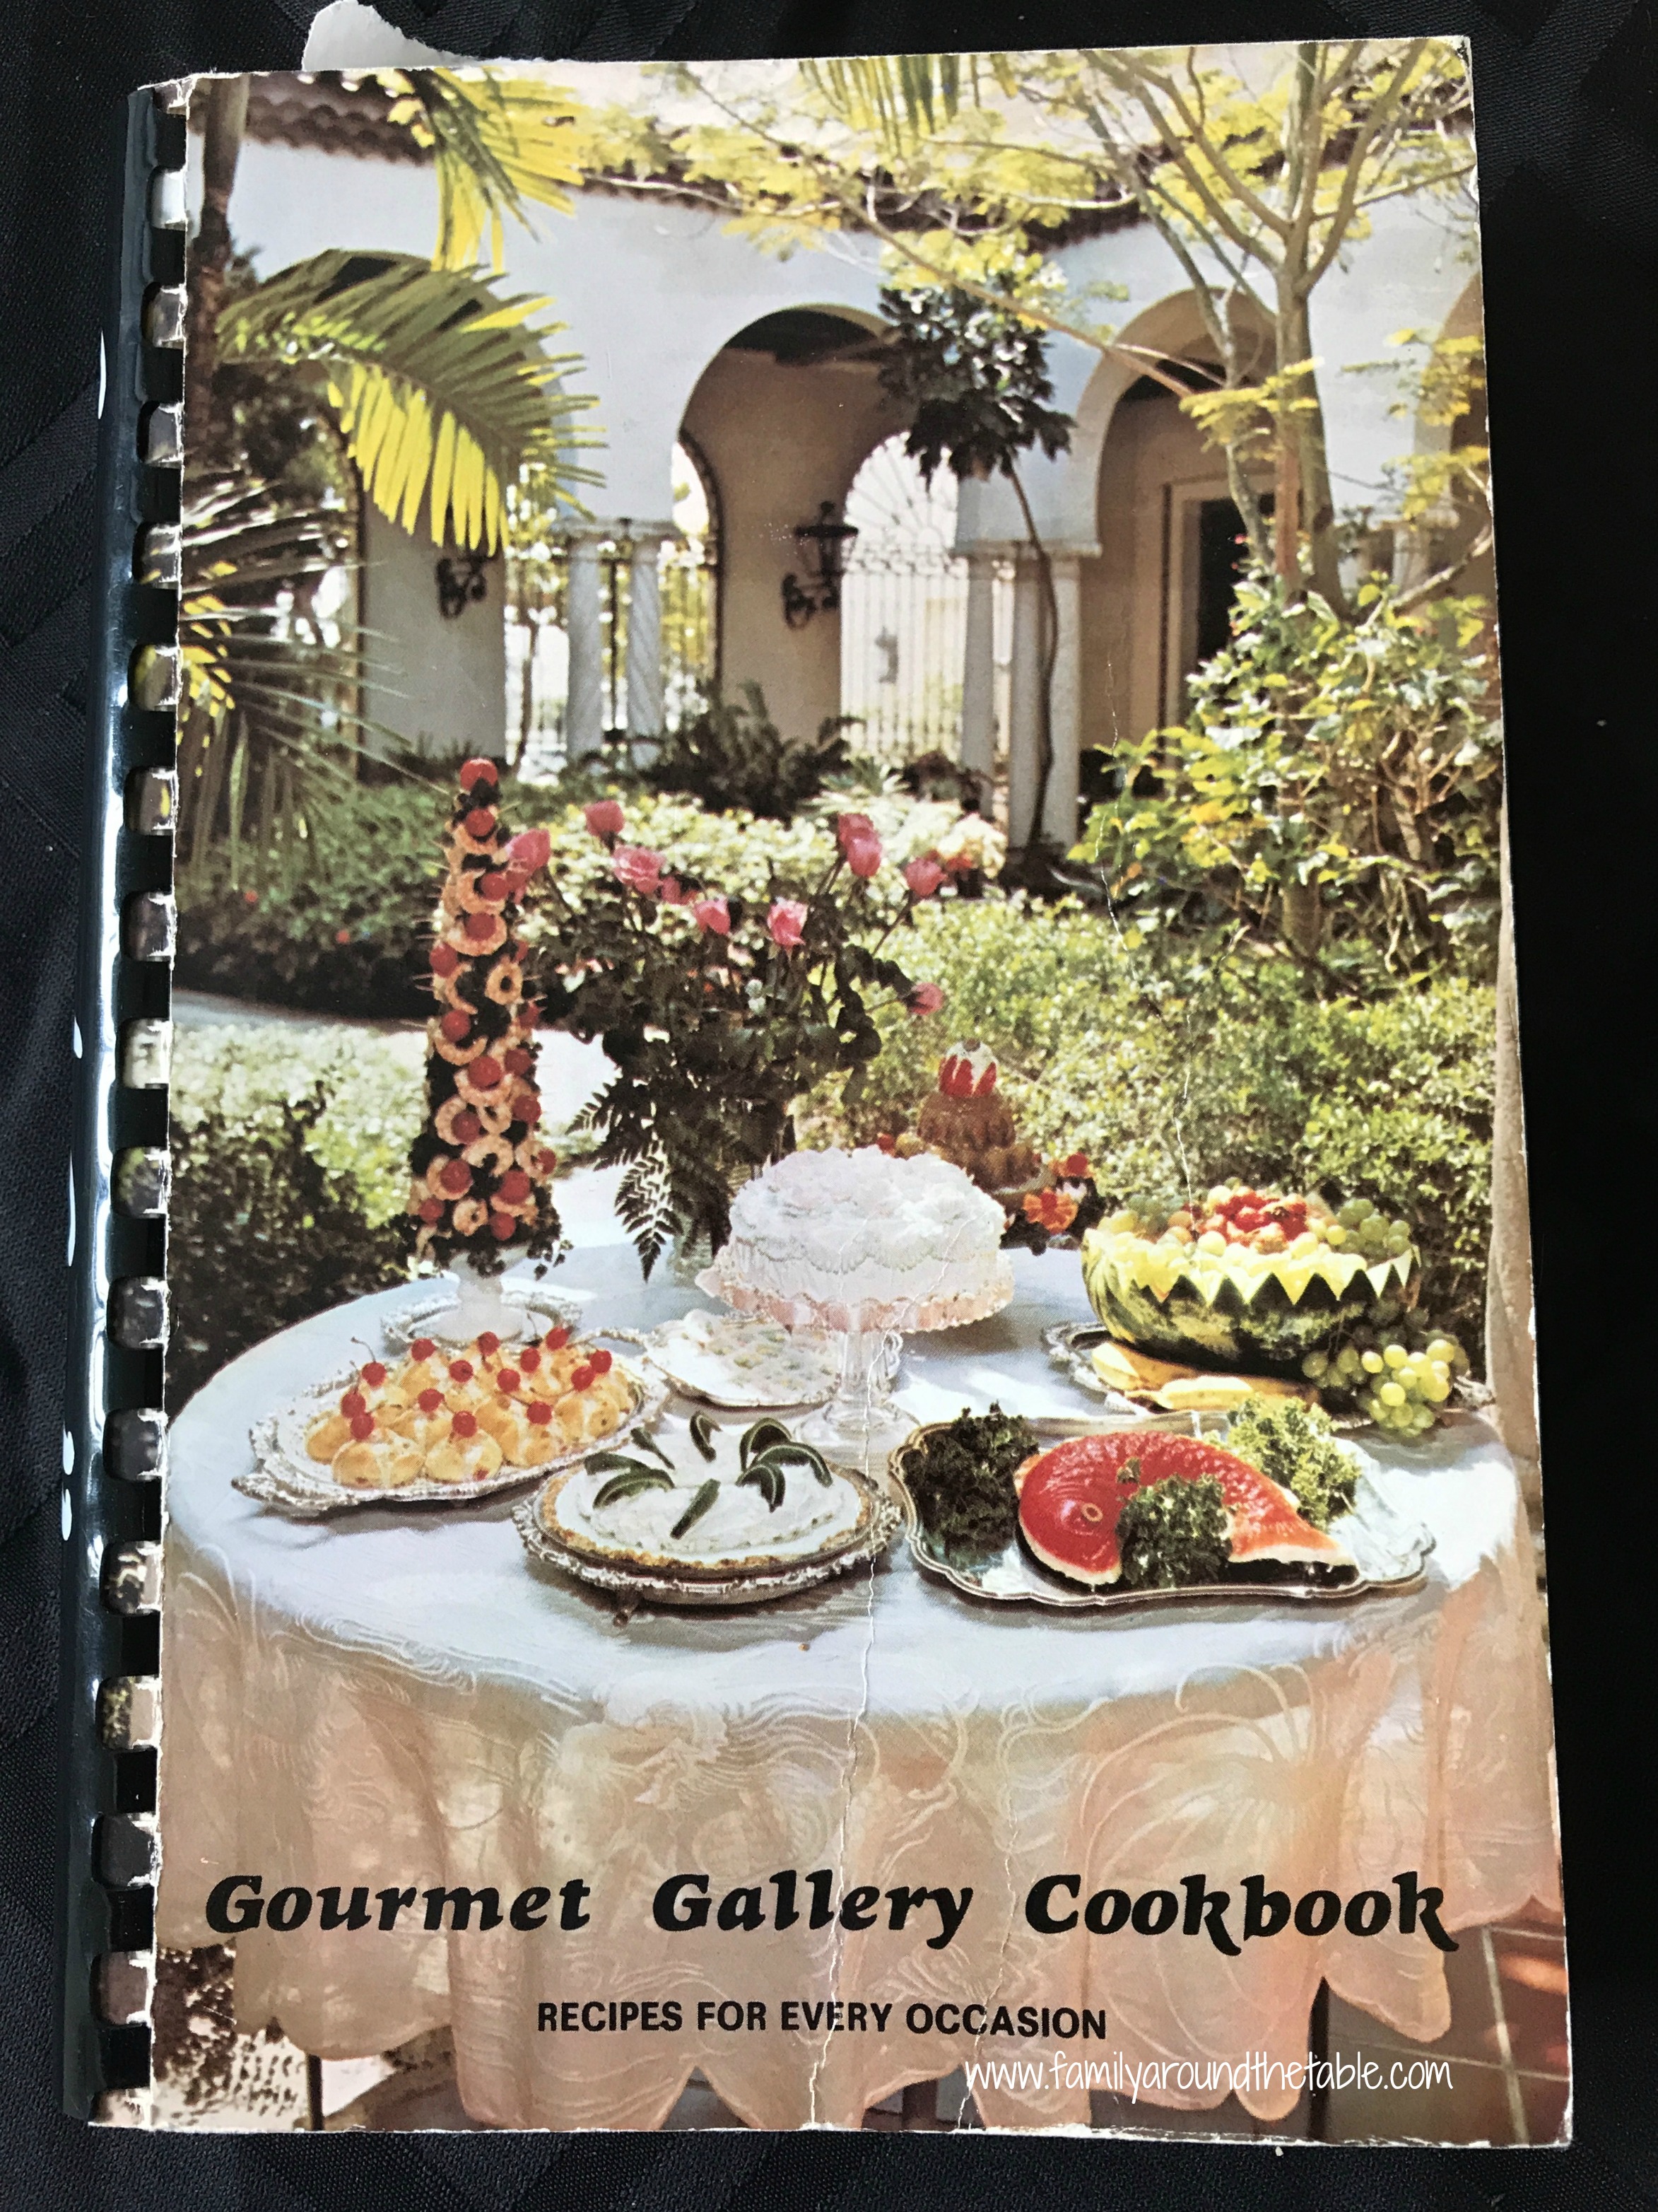 Gourmet Gallery Cookbook from The Museum of Fine Arts, St. Petersburg, FL